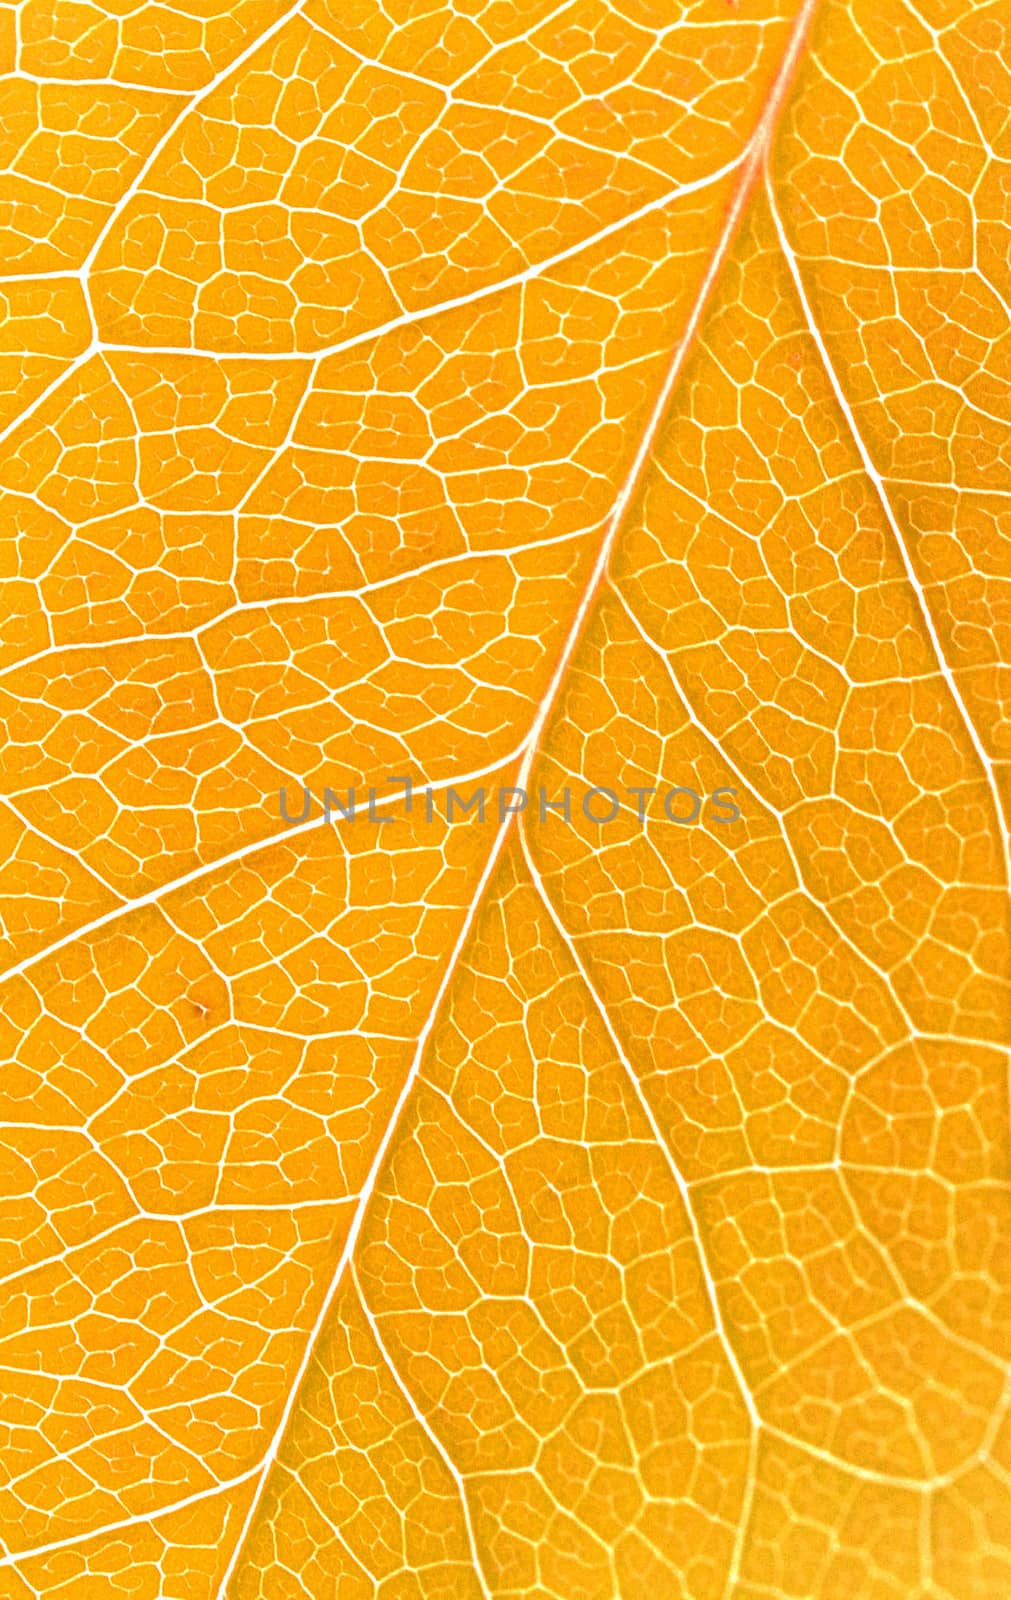 Beautiful yellow autumn leaves background by shutswis